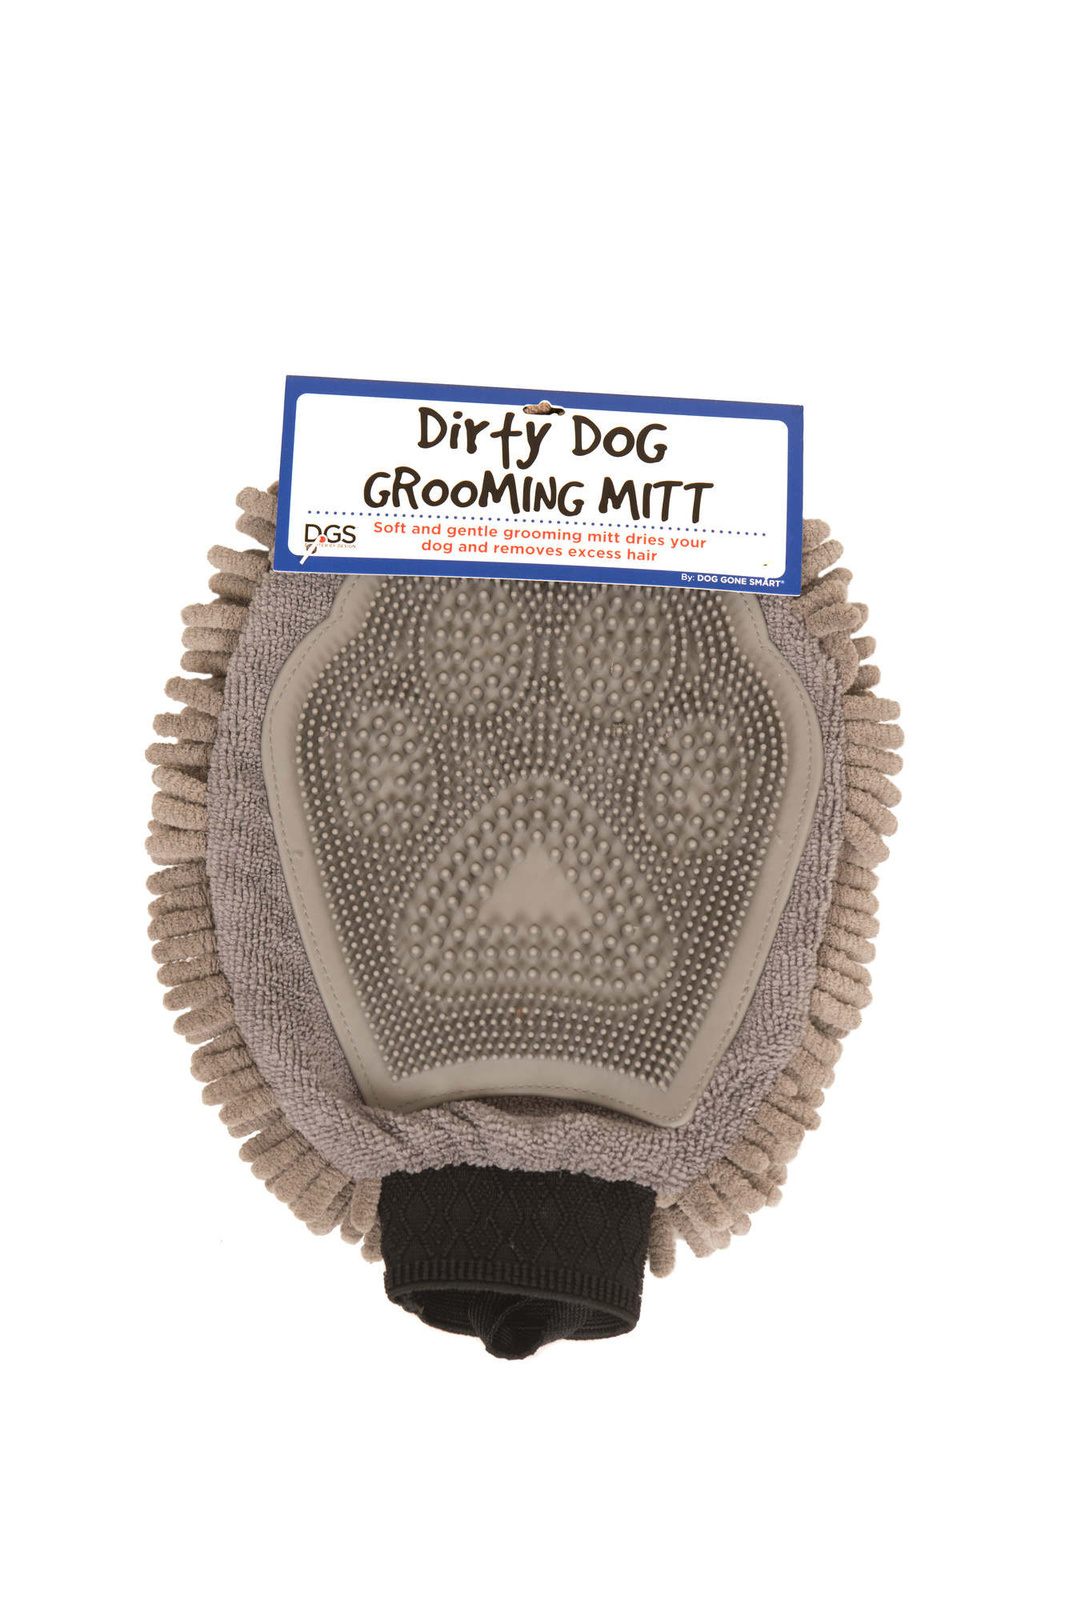 Dog Gone Smart перчатка для груминга Grooming Mitt, 25*18 см, серая (180 г)